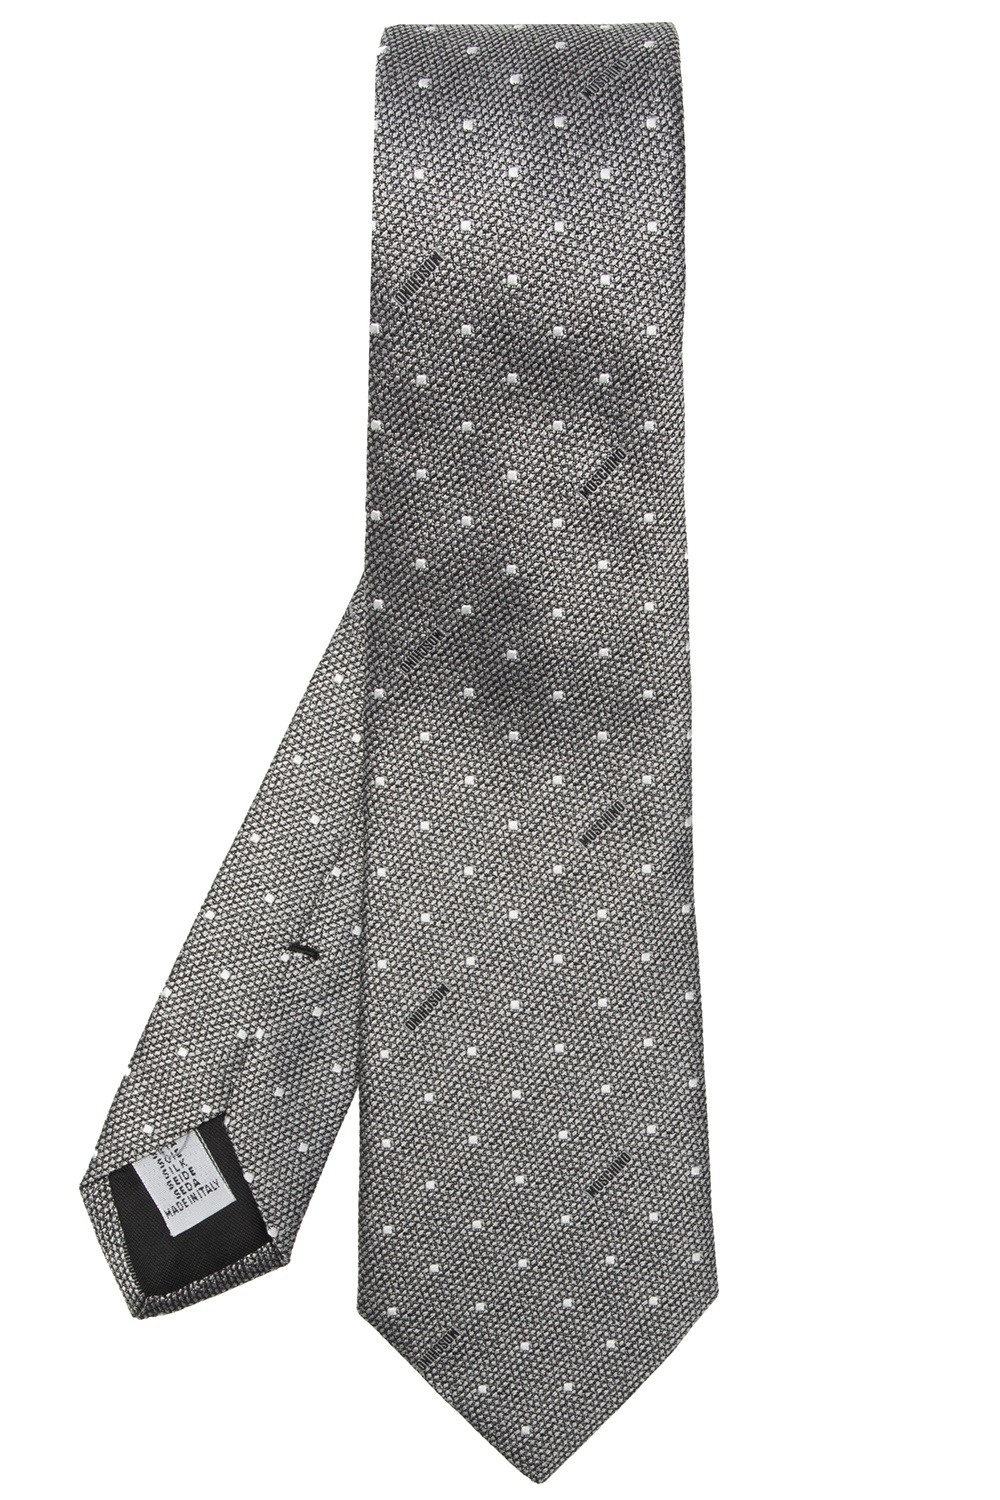 Grey Pocket square with logo Moschino - Vitkac Spain